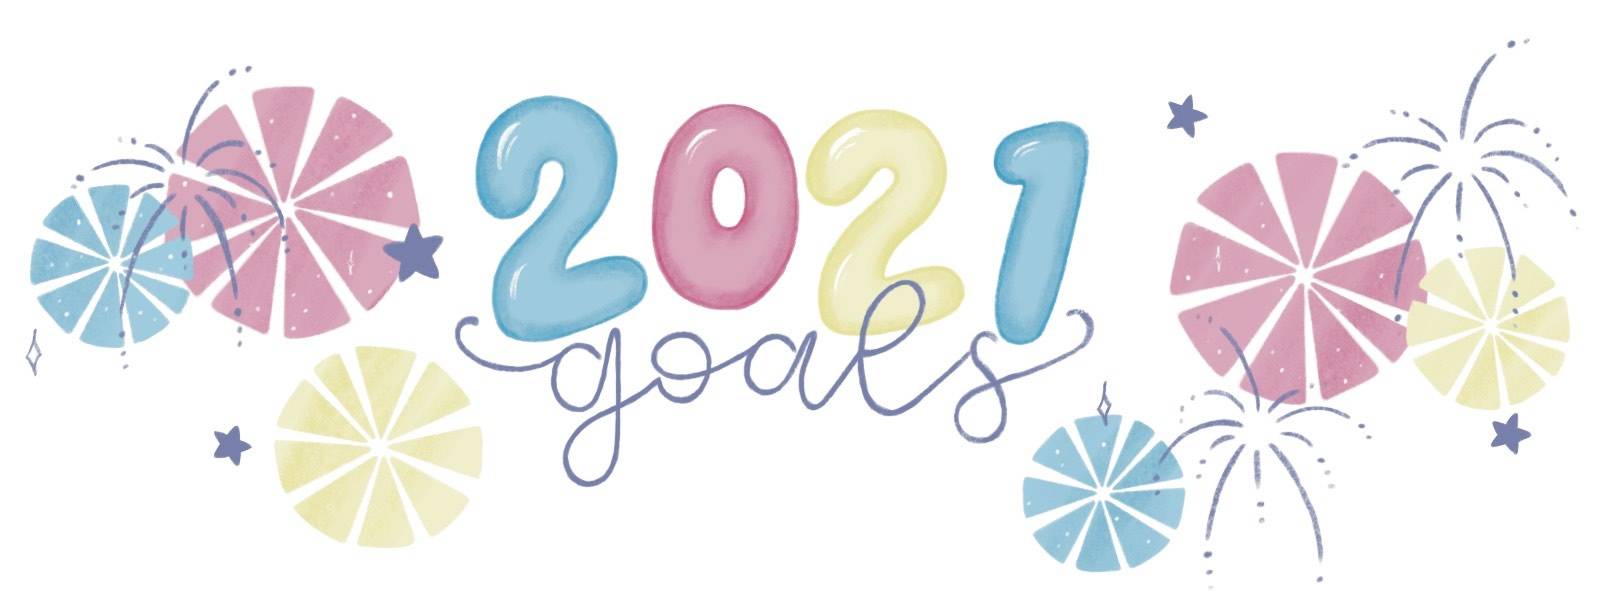 Couple Goals Ideas: Relationship Goals Images, Pics 2021